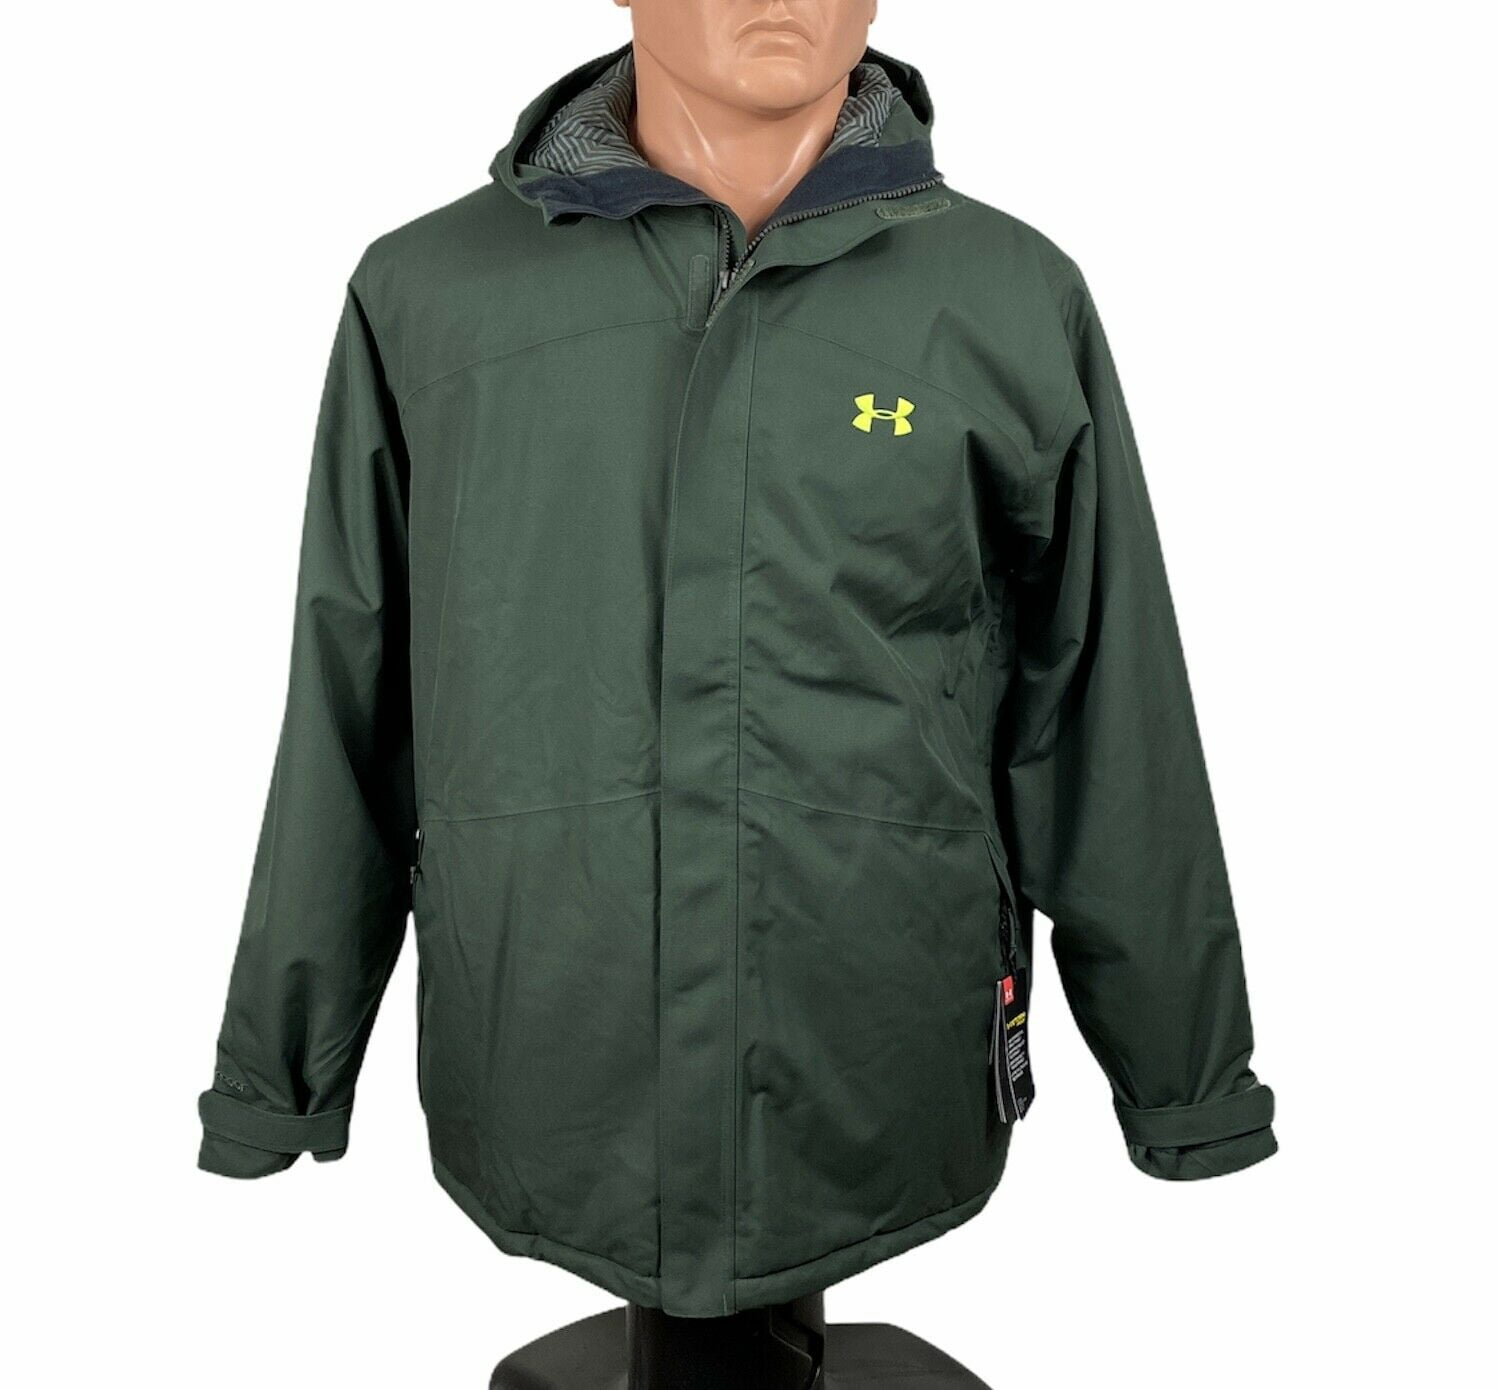 Under Armour coldgear jacket - Athletic apparel